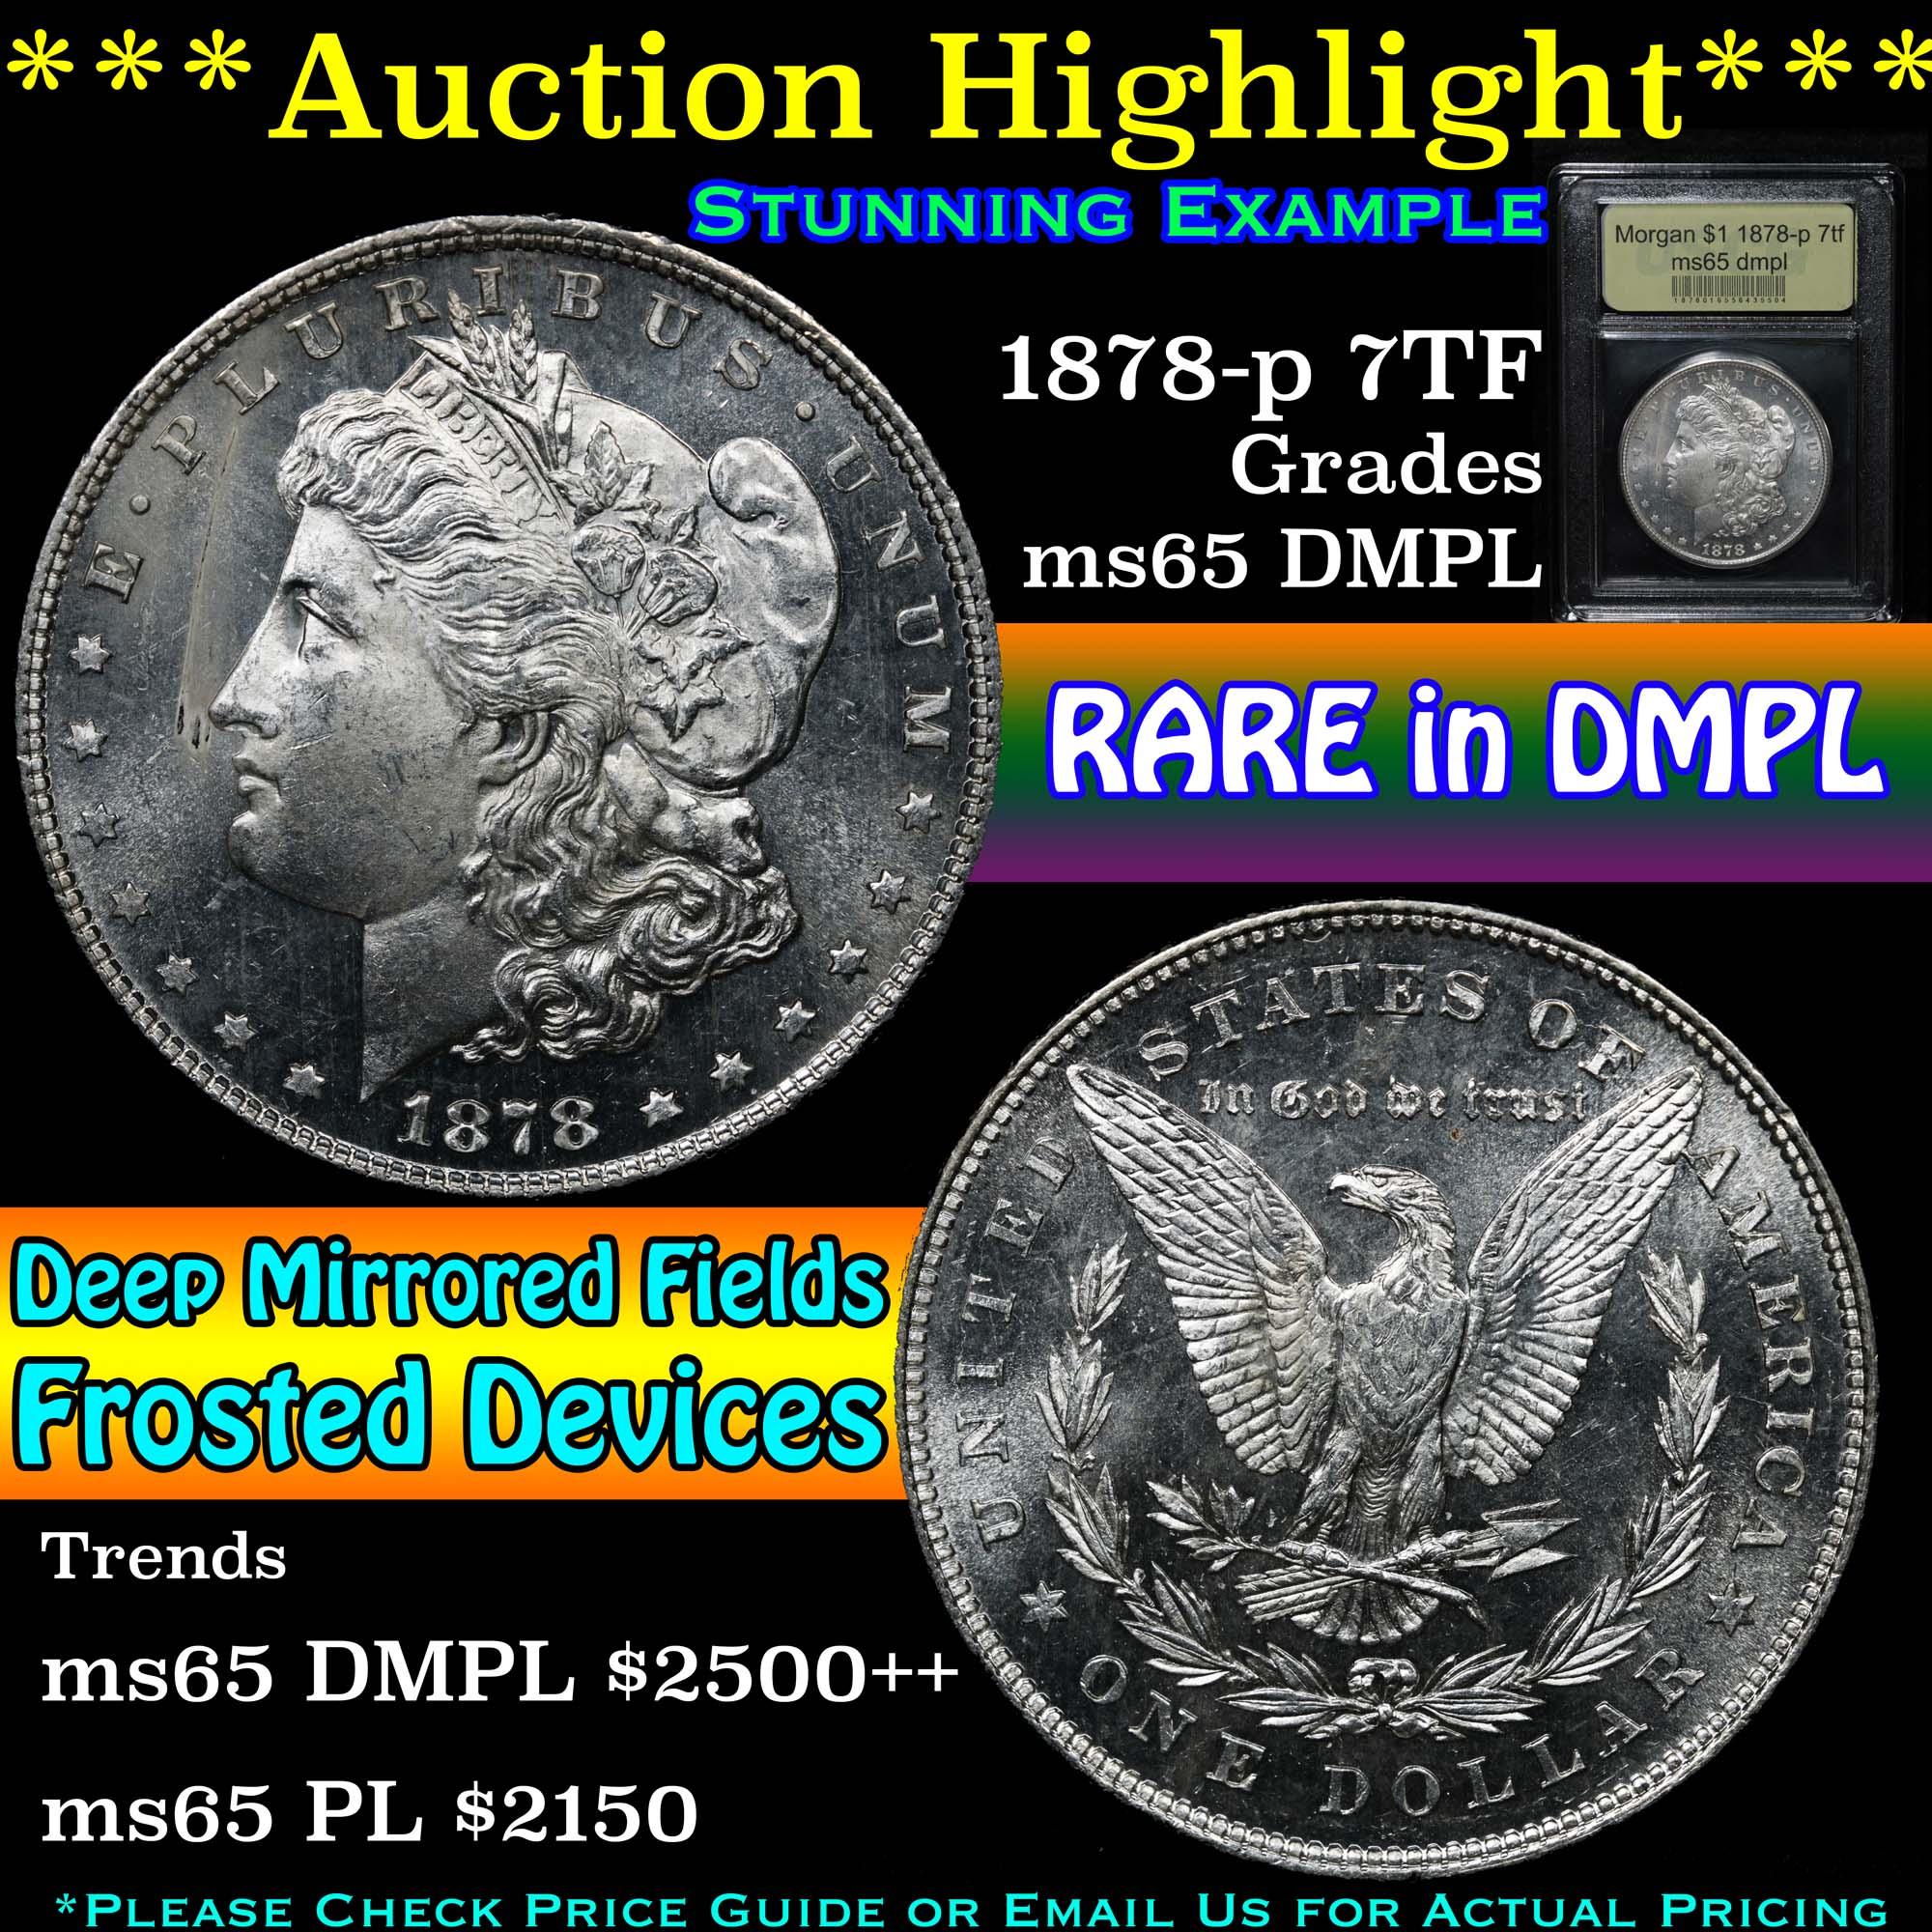 ***Auction Highlight*** 1878-p 7tf Morgan Dollar $1 Graded GEM Unc DMPL By USCG (fc)